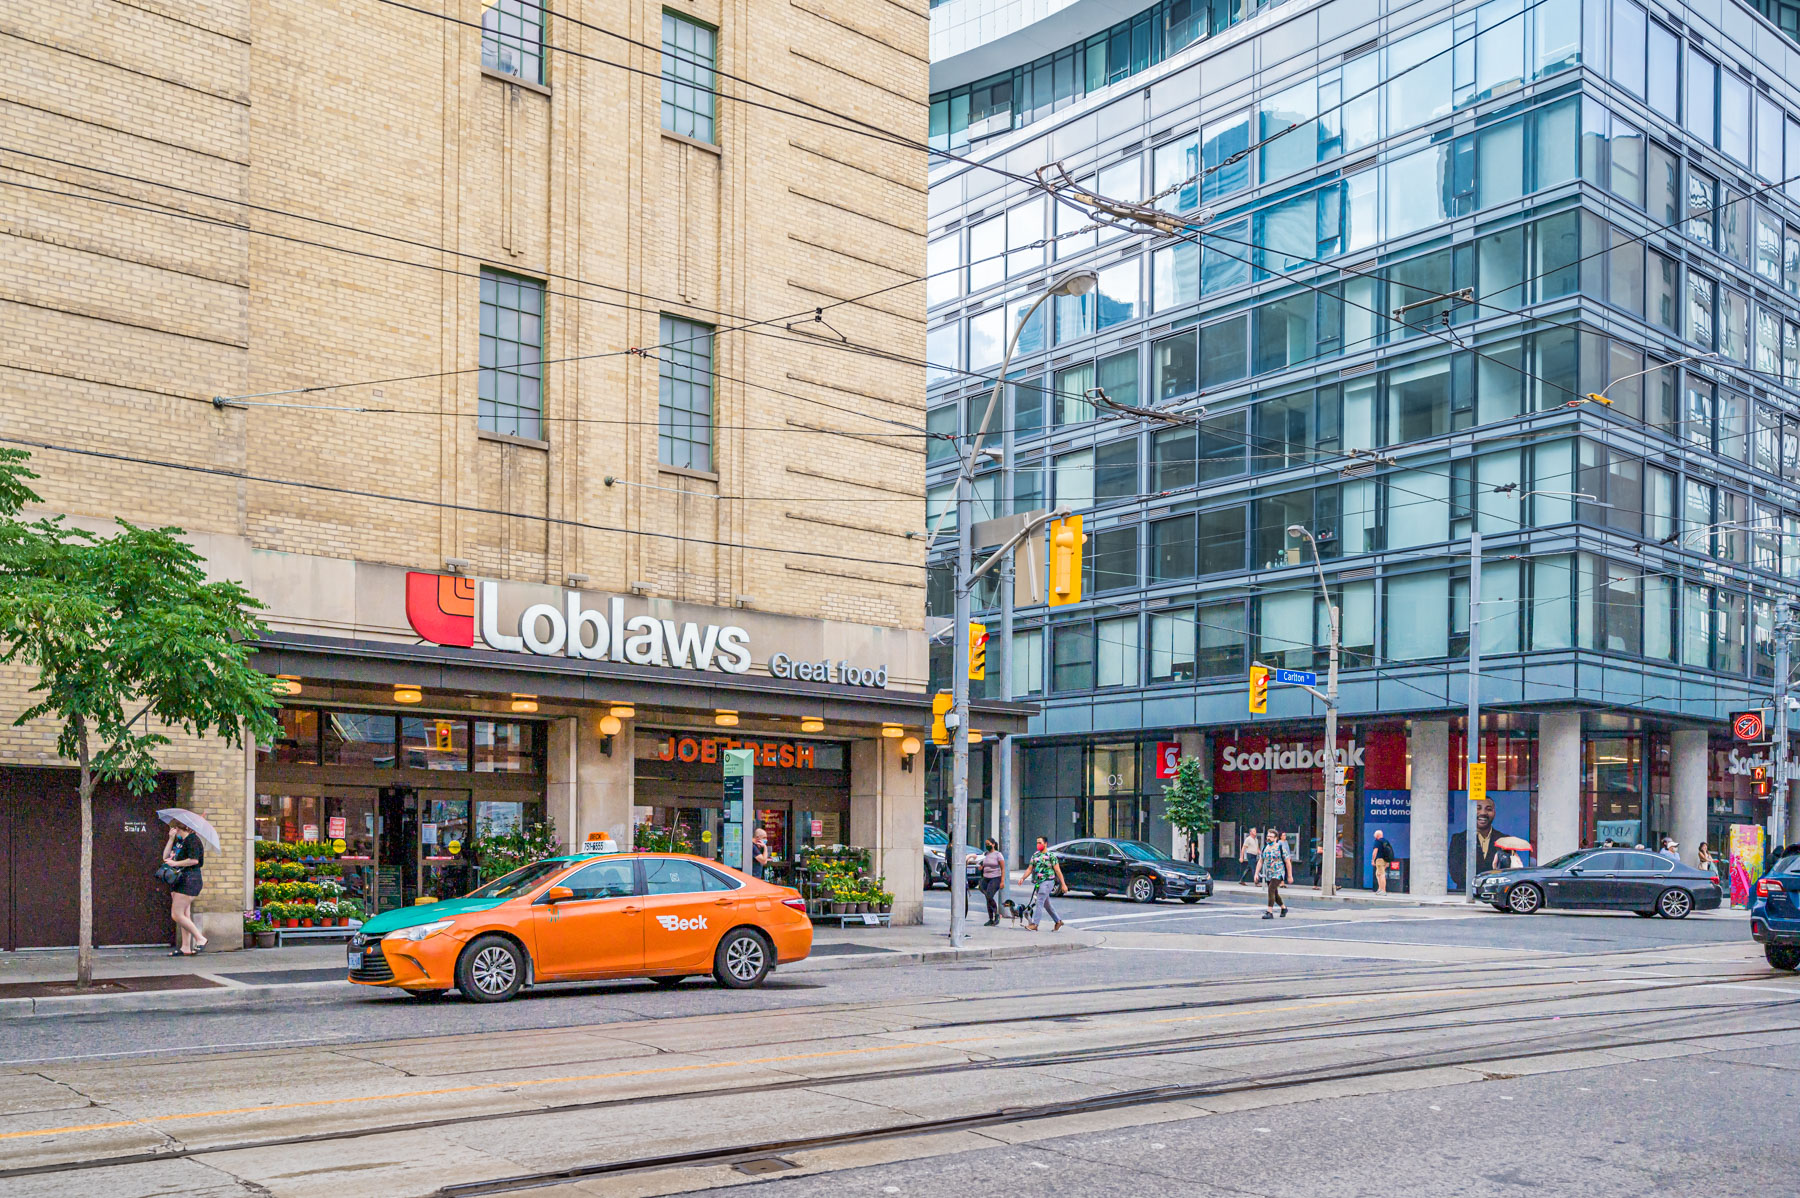 Loblaws grocery store exterior on Carlton St, Toronto.